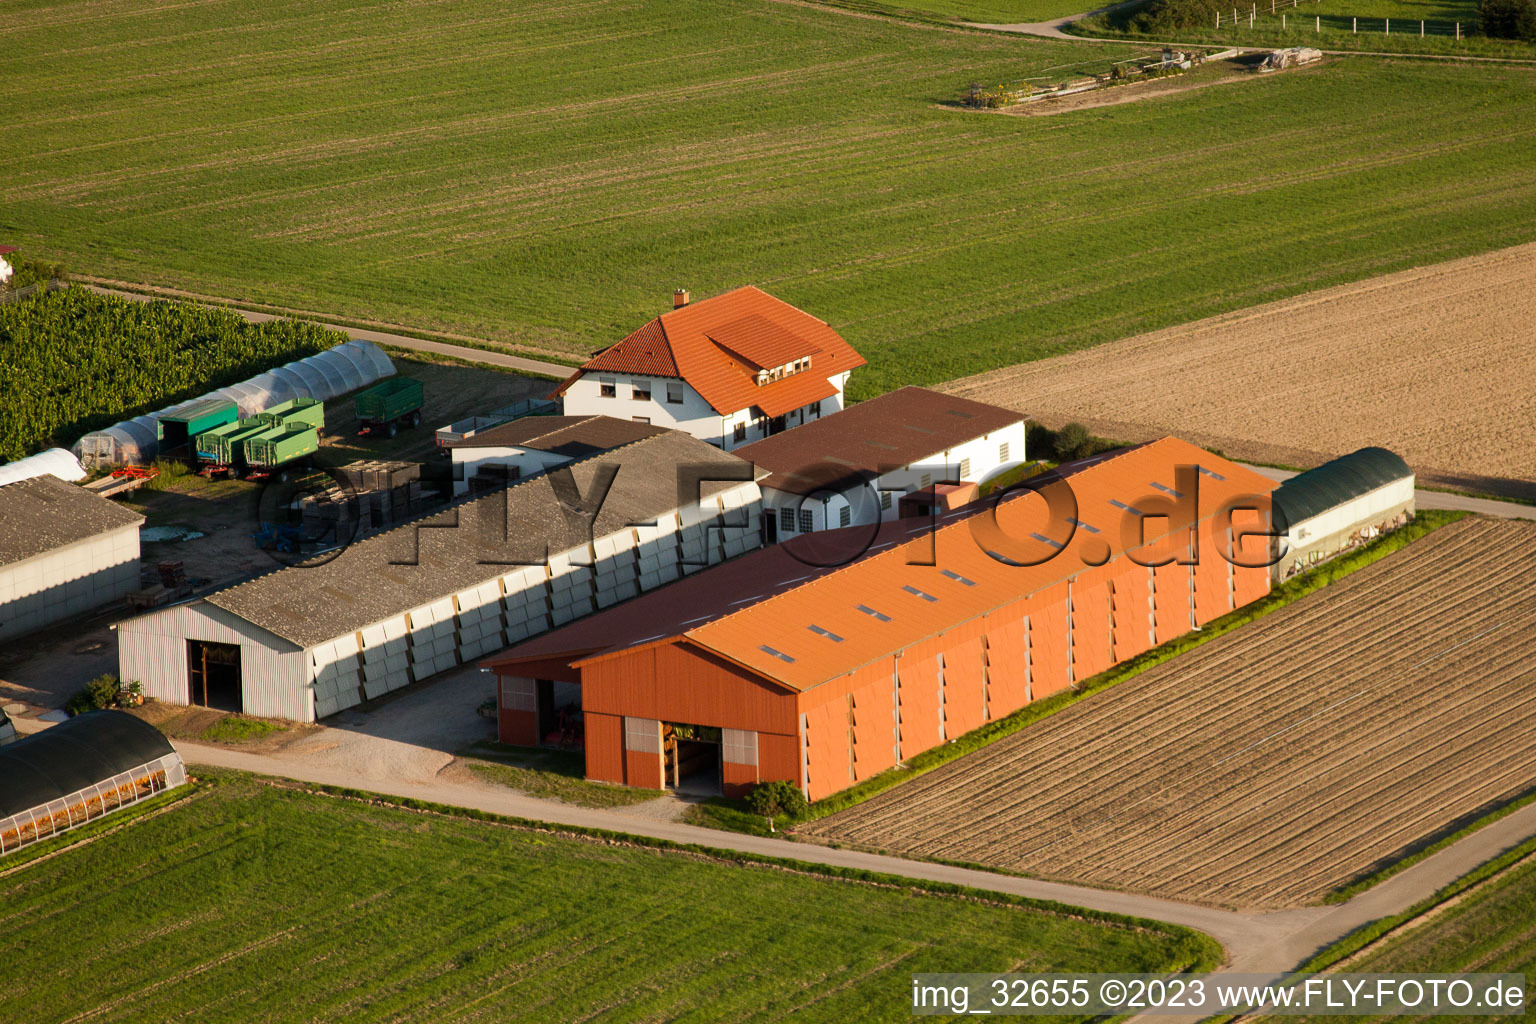 Emigrant farms in Hatzenbühl in the state Rhineland-Palatinate, Germany